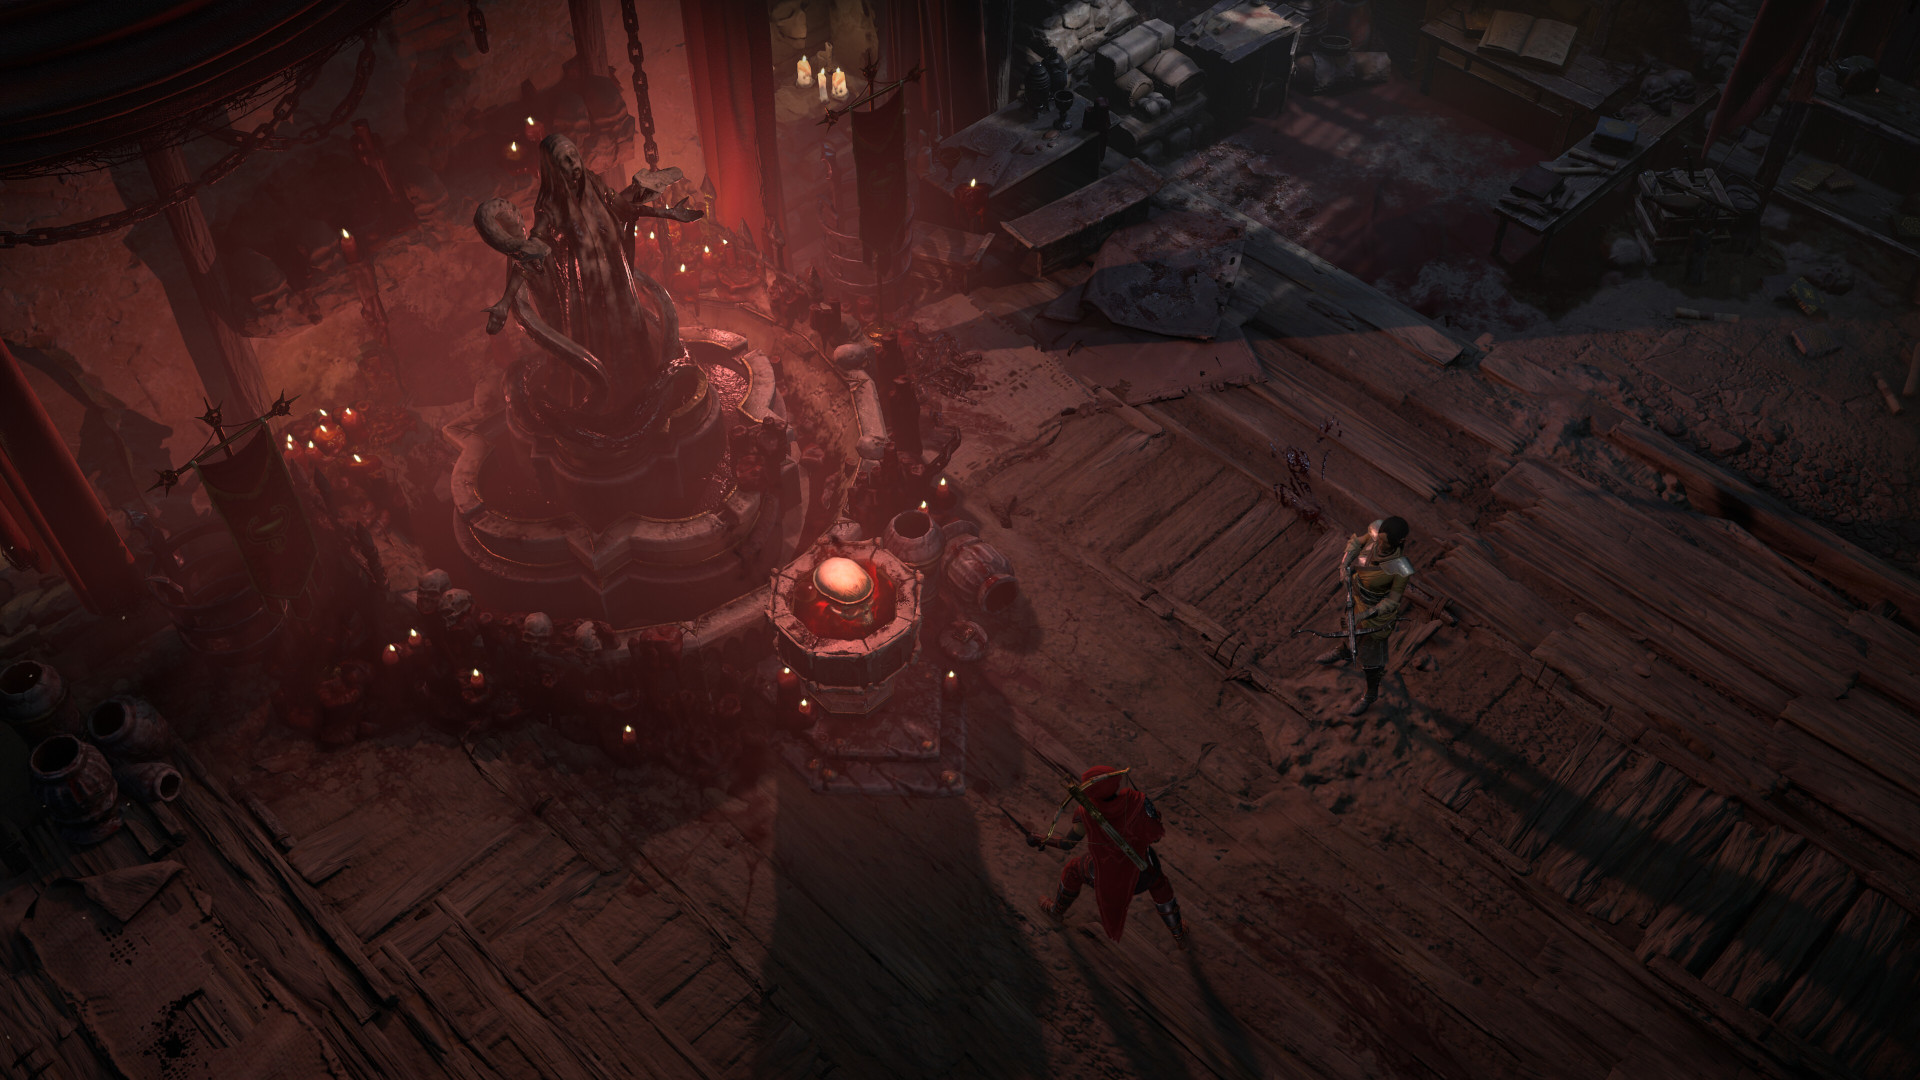 Diablo 4 Gets The Steam Deck Verified Badge - Steam Deck HQ